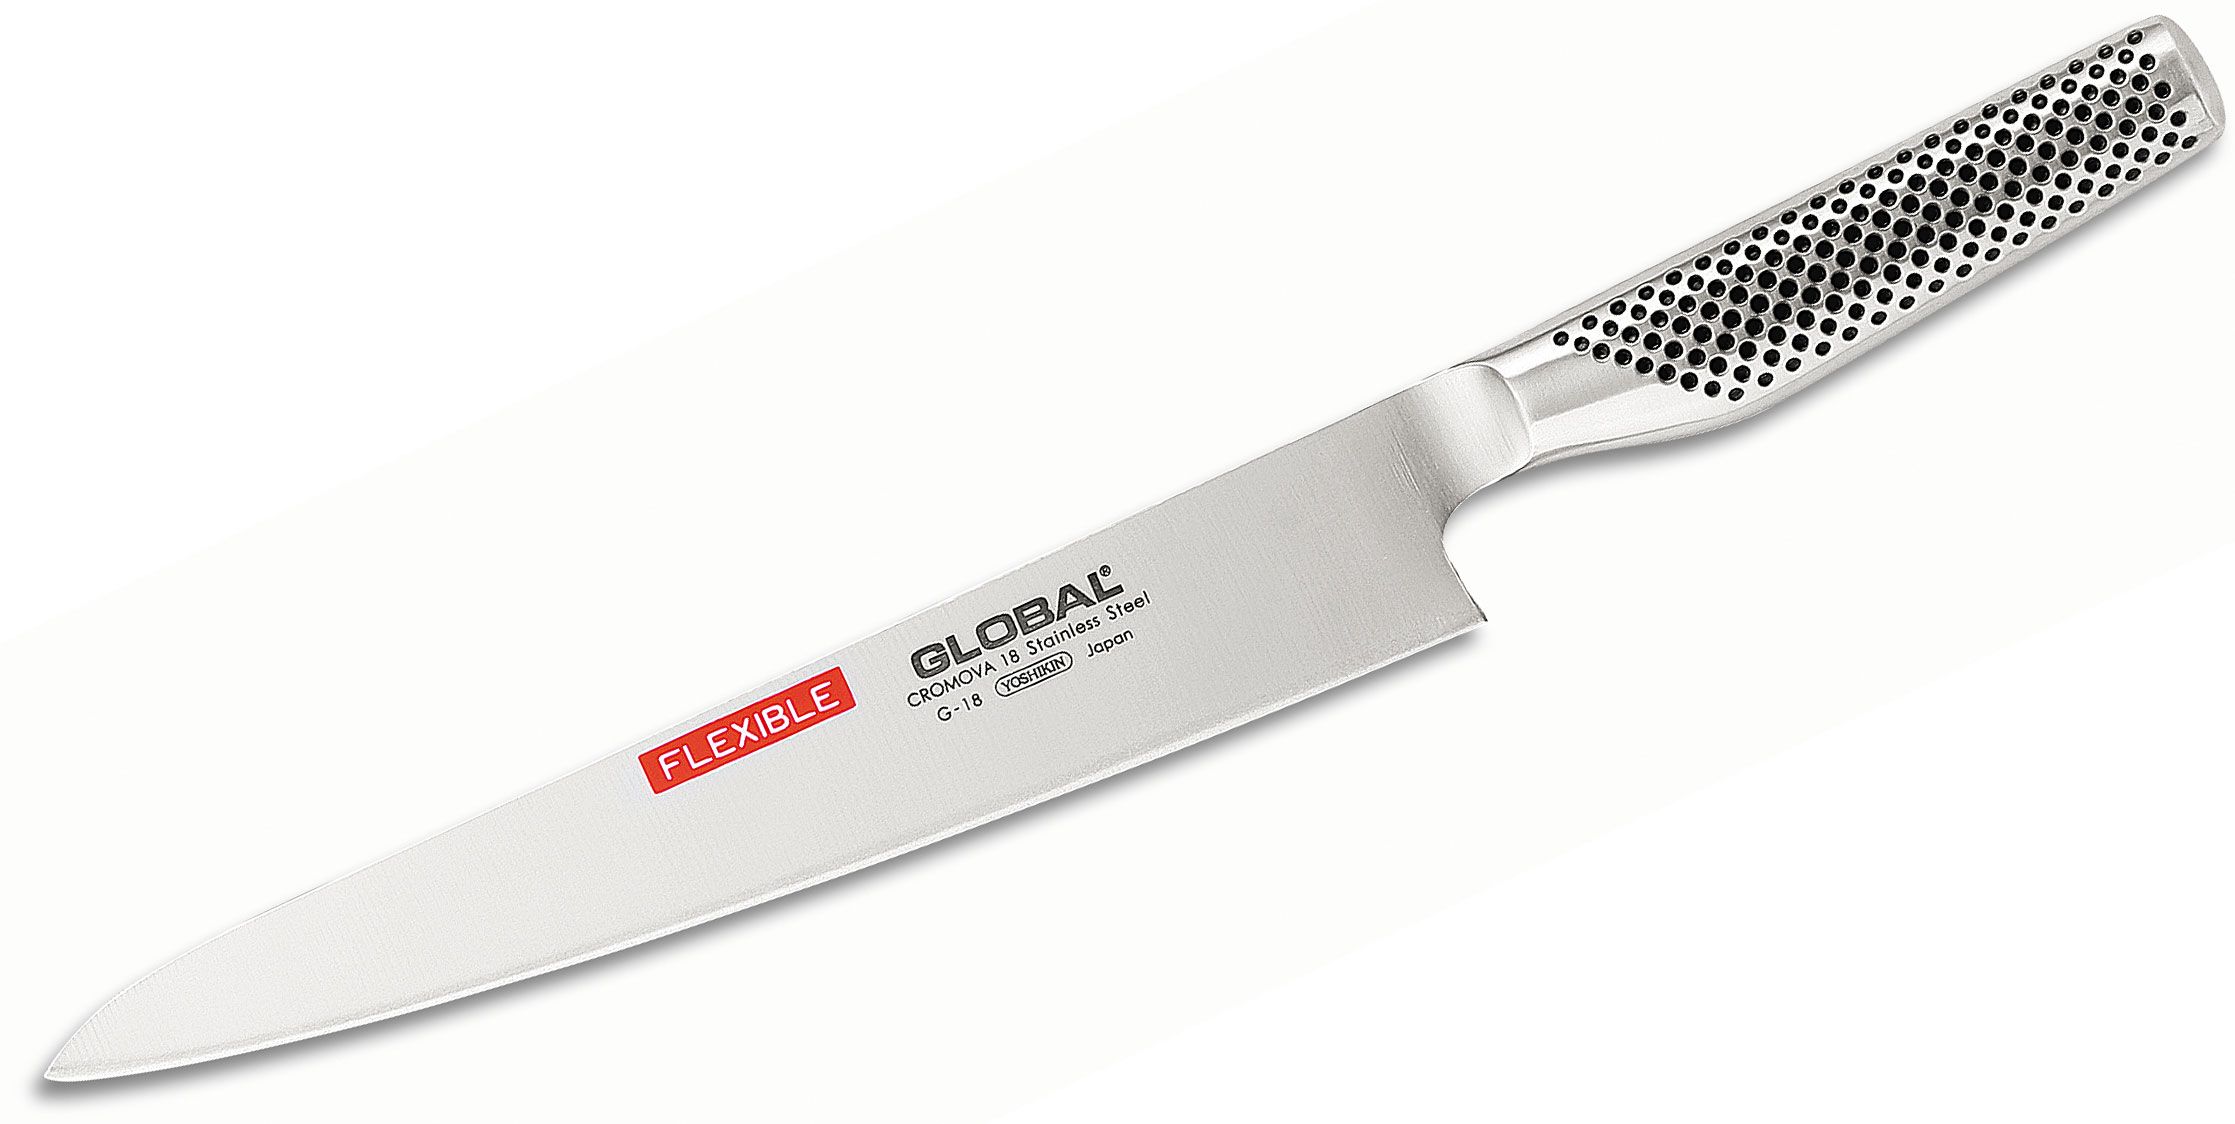 Global G-18 Classic 10 Flexible Fillet Knife - KnifeCenter